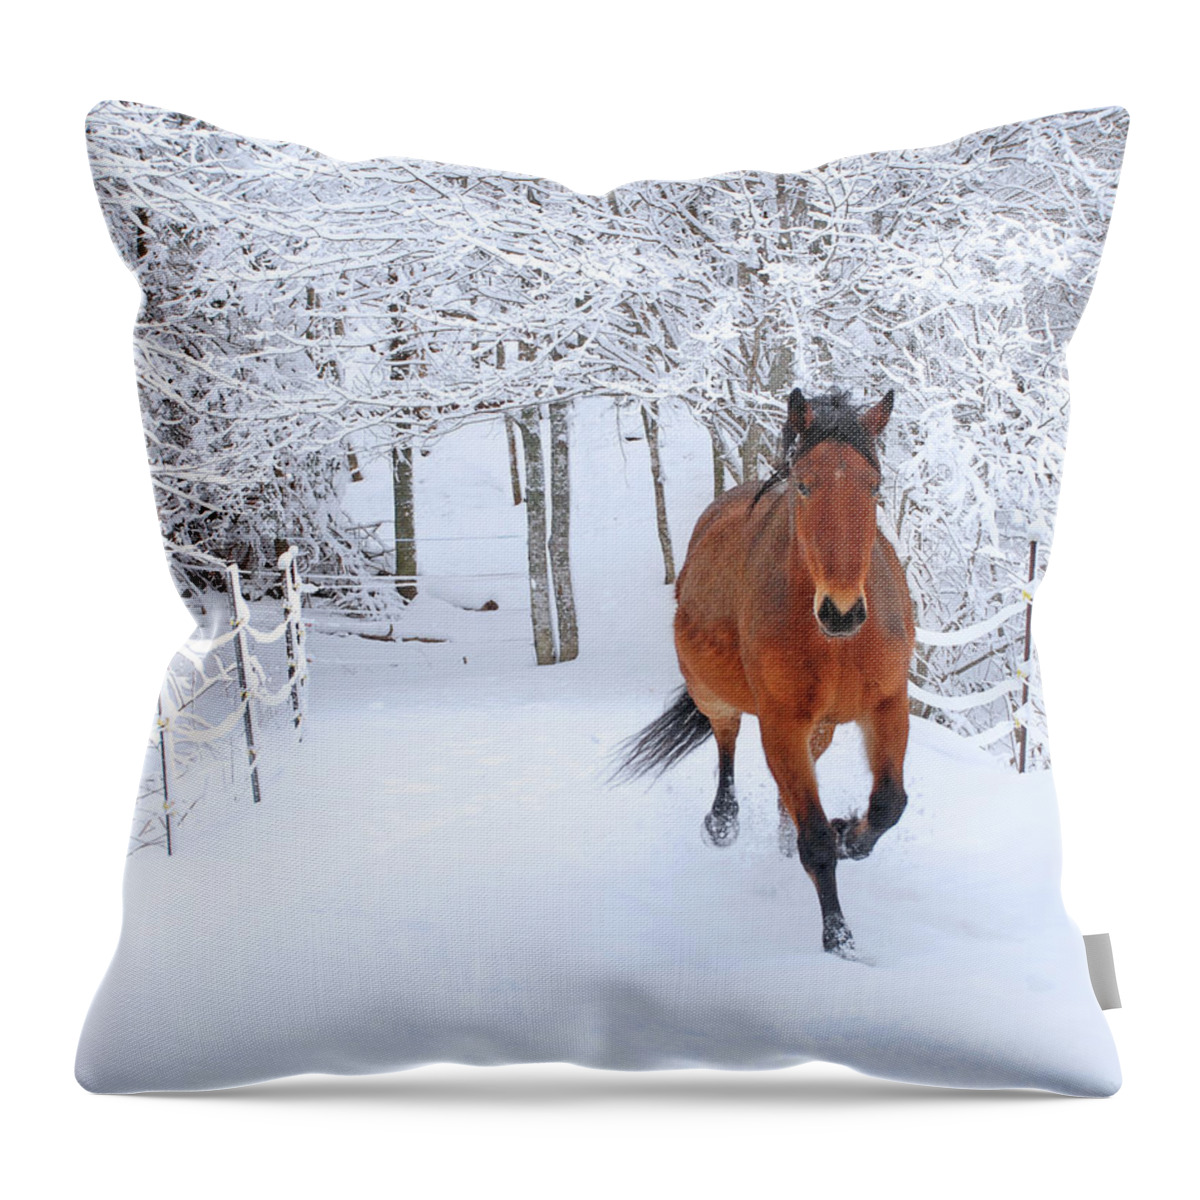 Horse Throw Pillow featuring the photograph Horse Trotting Through Fresh by Anne Louise Macdonald Of Hug A Horse Farm